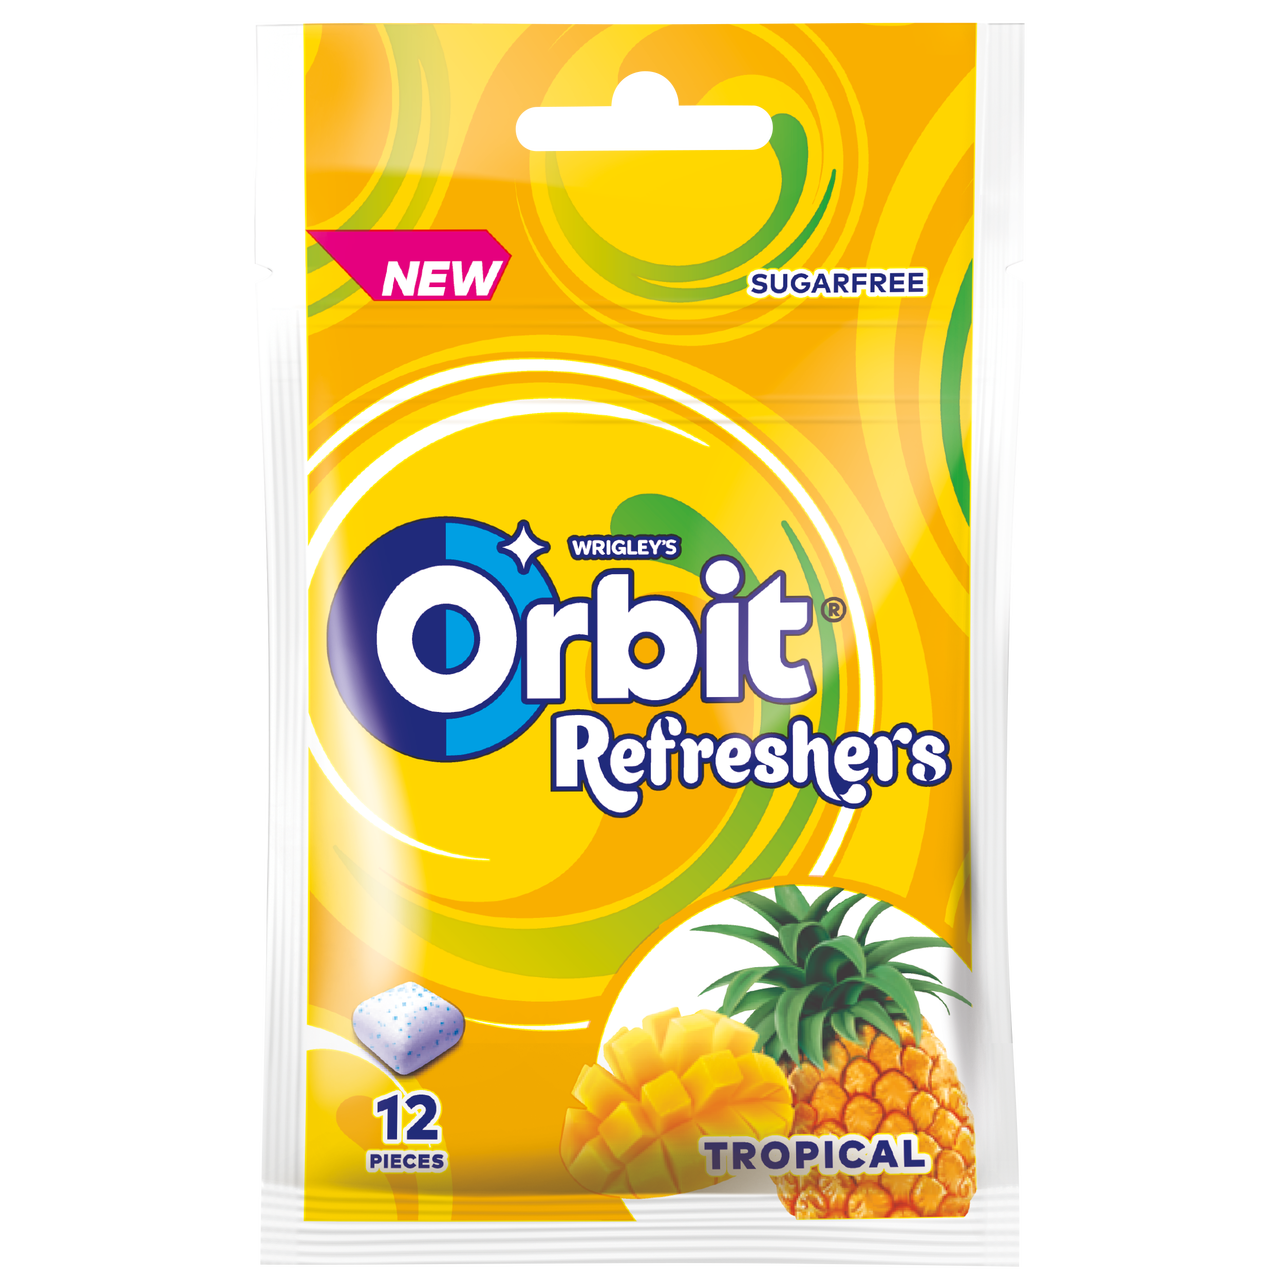 Orbit® Refreshers Tropical
Gramatura: 26 g